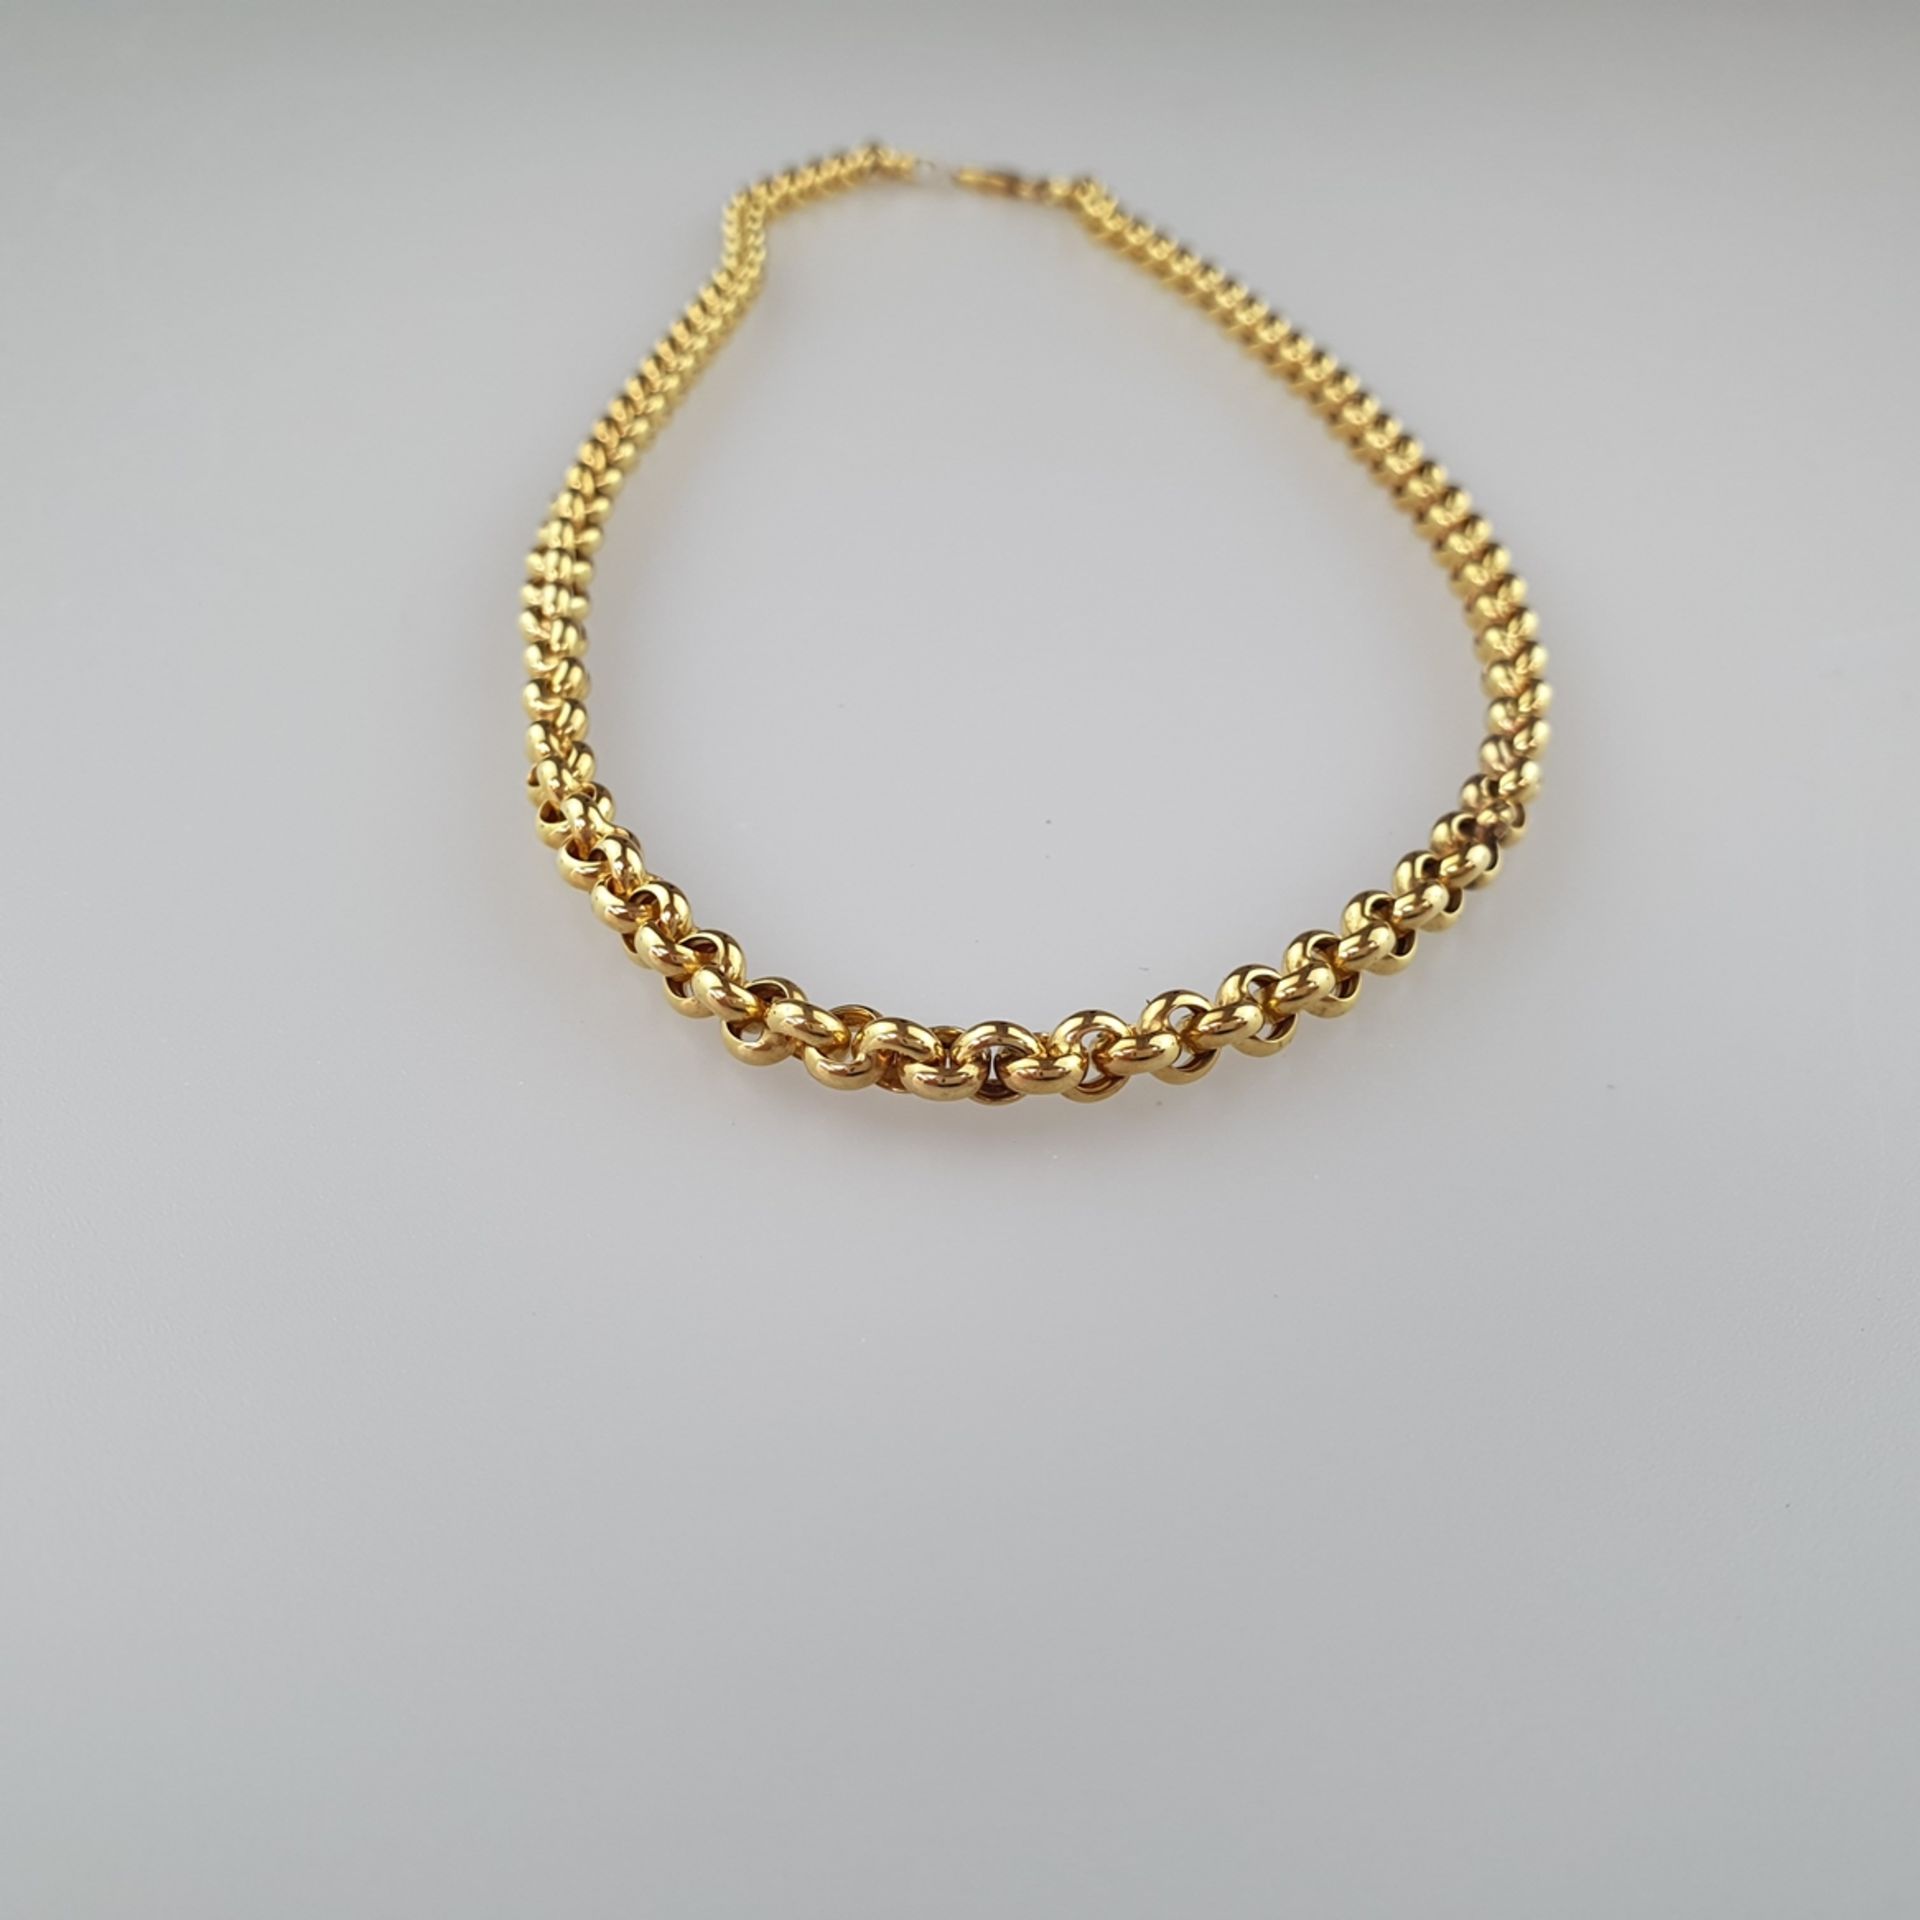 Goldkette - Gelbgold 333/000, kurze Kette aus ringförmigen Gliedern, ca. 43cm lang, ca. 13,1 g - Image 4 of 4